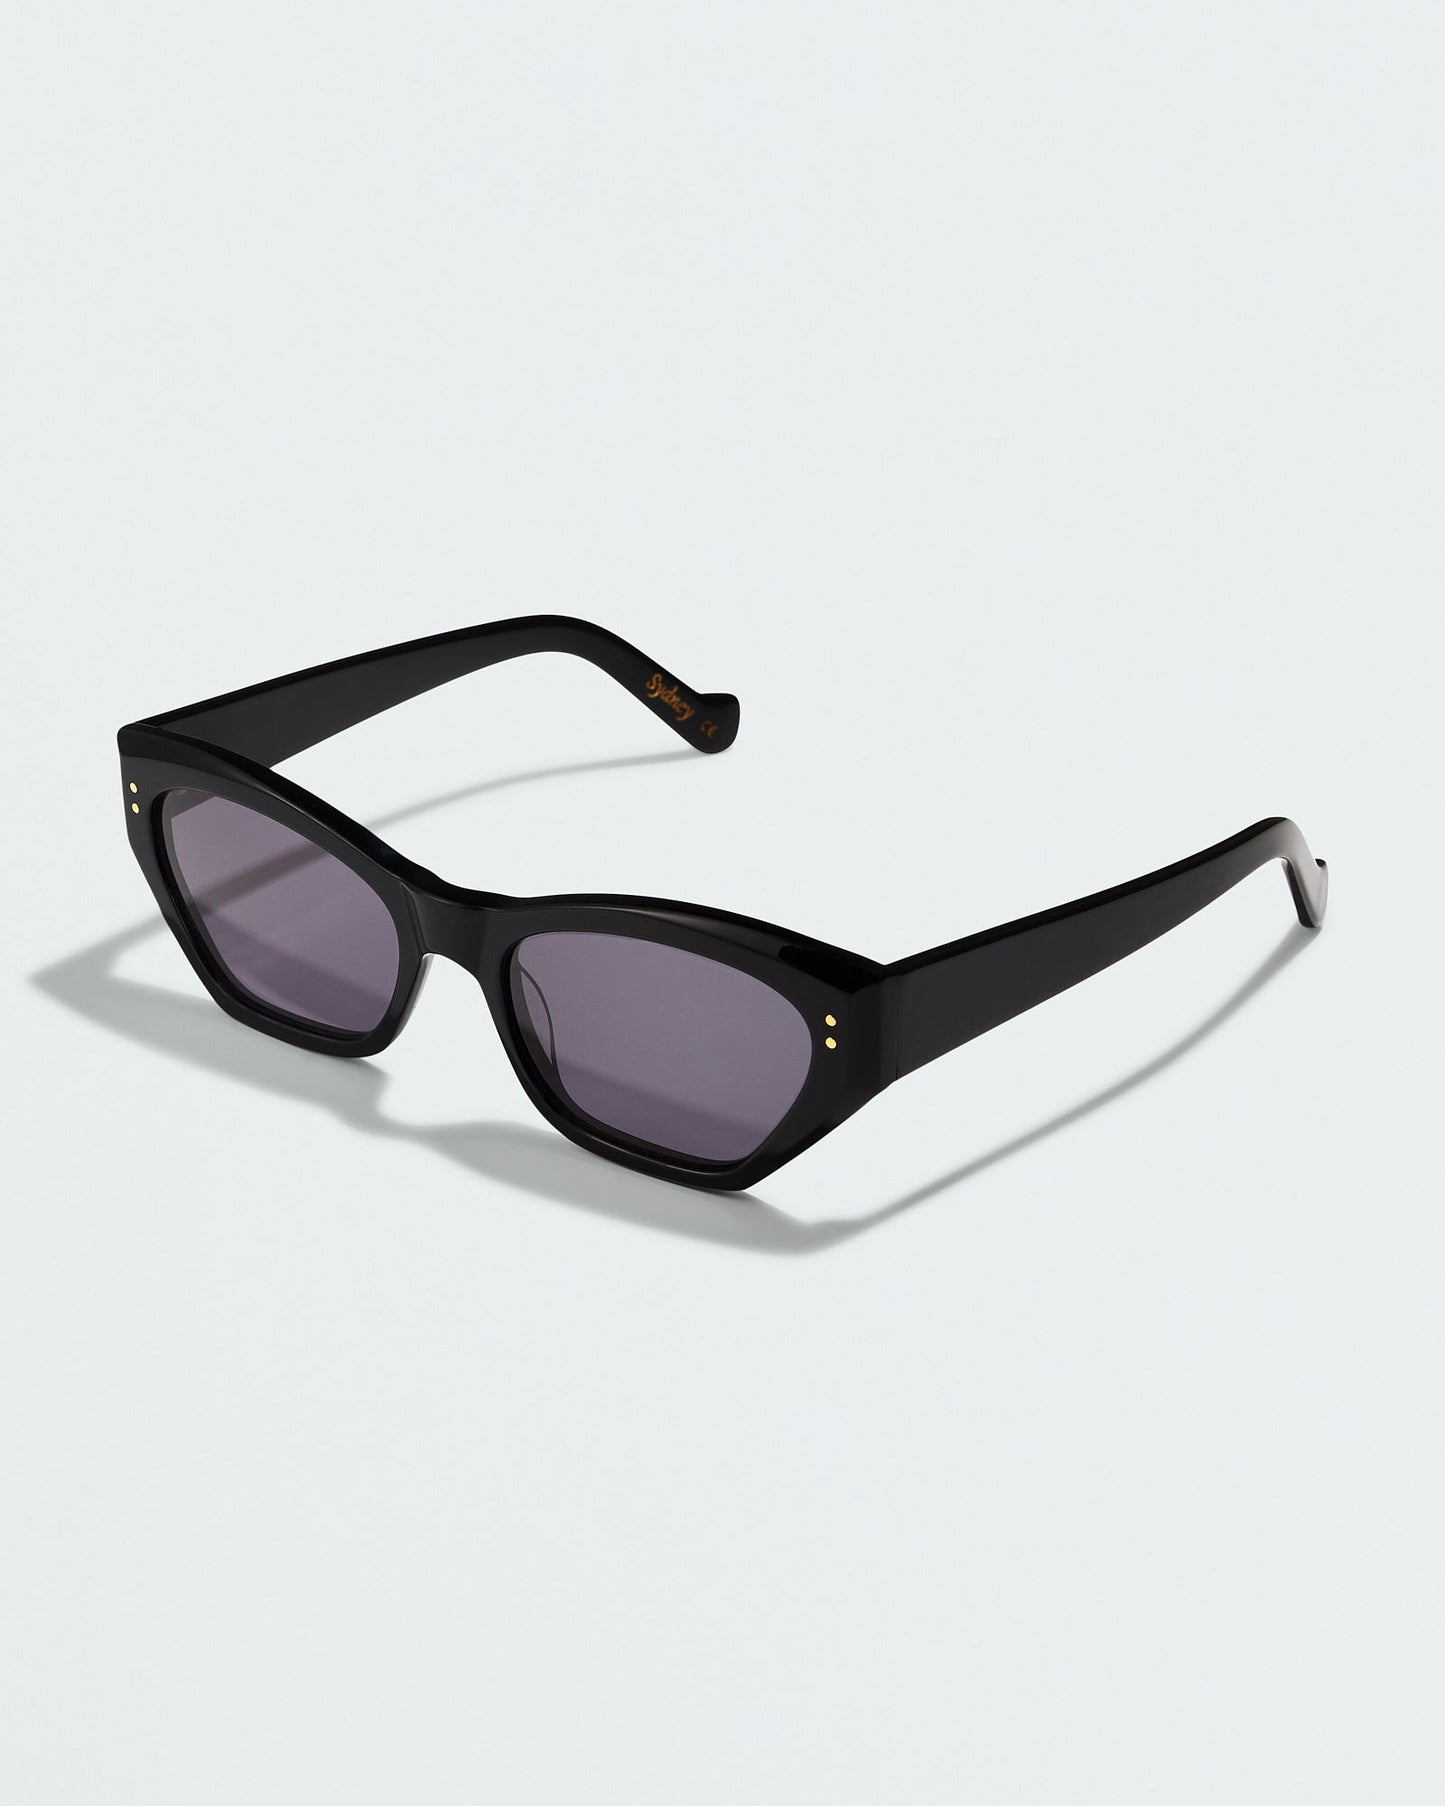 The Sydney, Black - Classic Frame Sunnies, Women's Sunglasses & Eyewear by Luv Lou